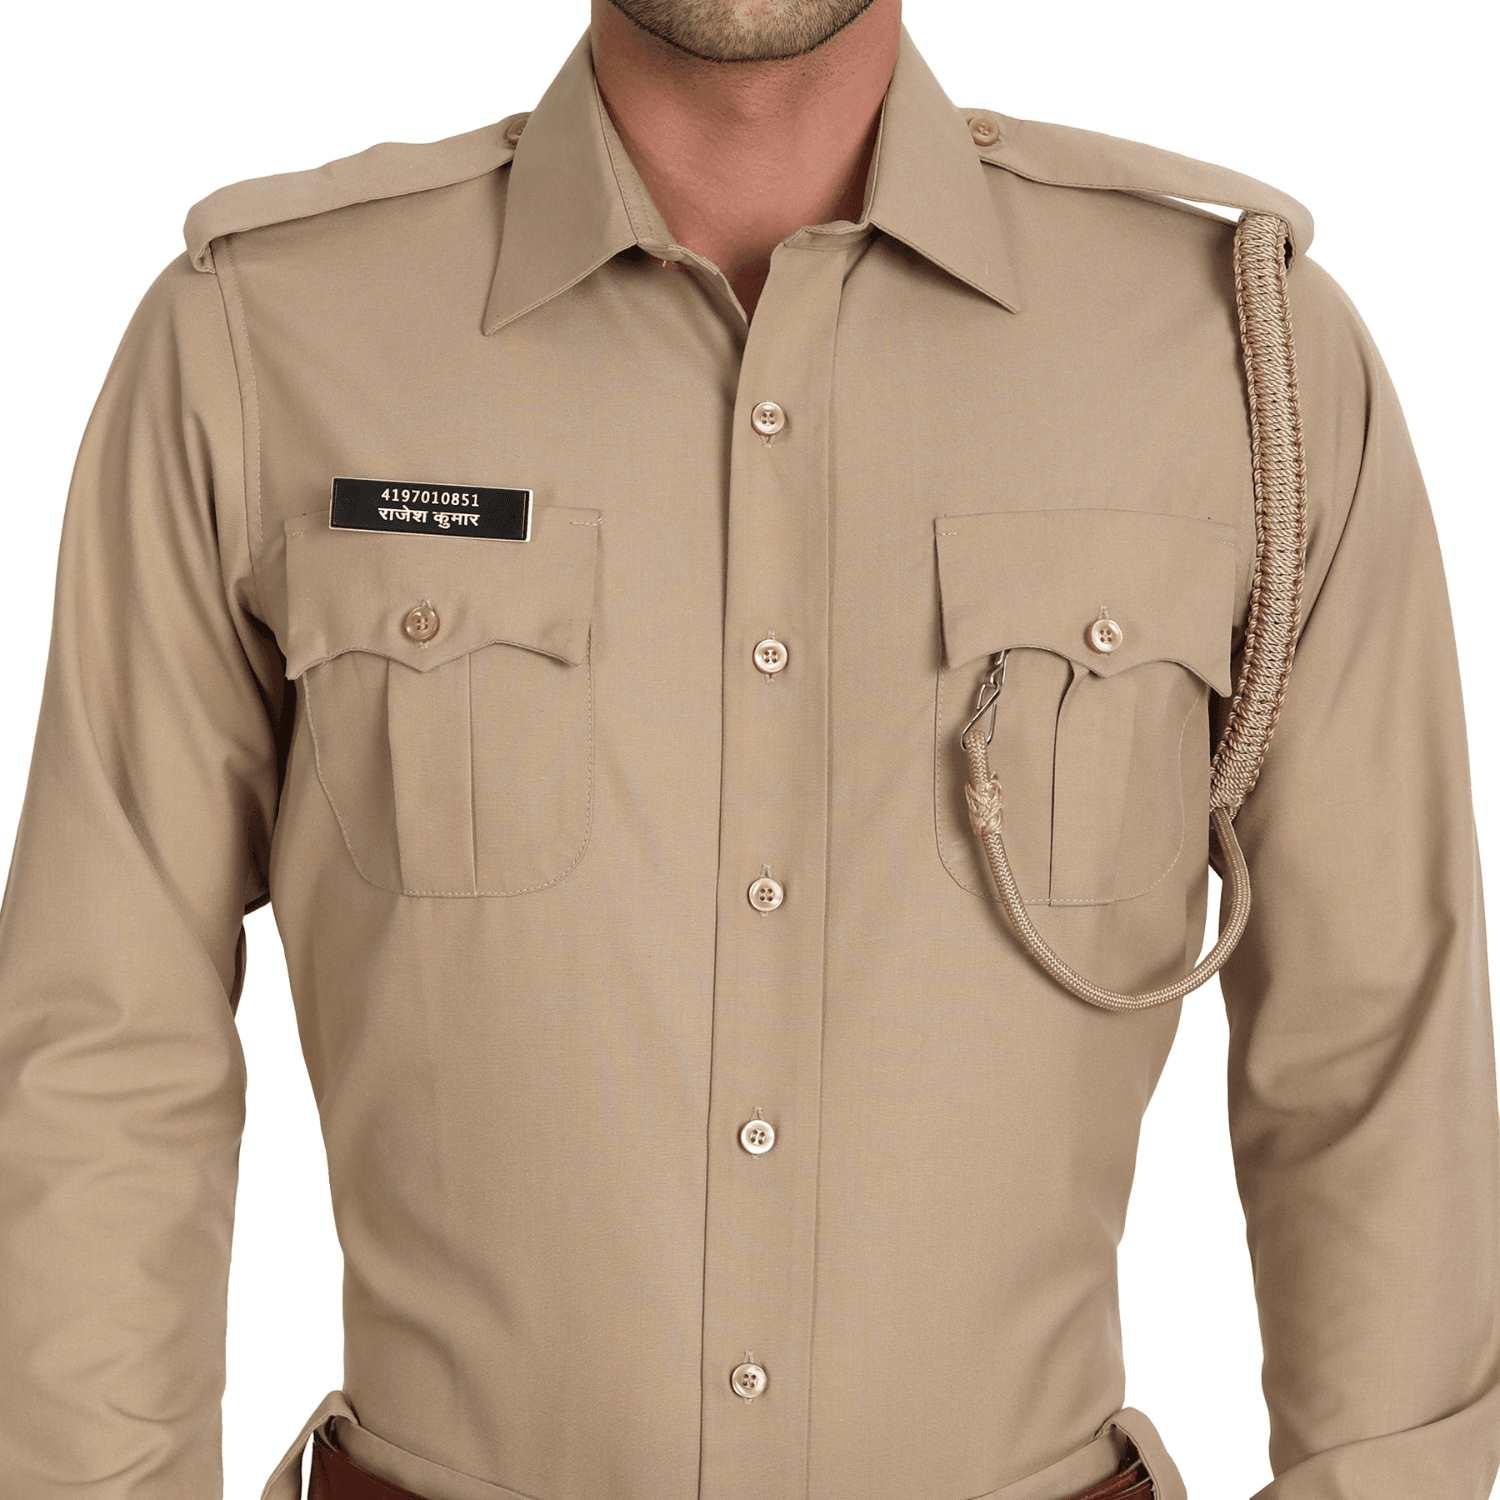 Sexy Police Officer Uniform – The Burner Shop